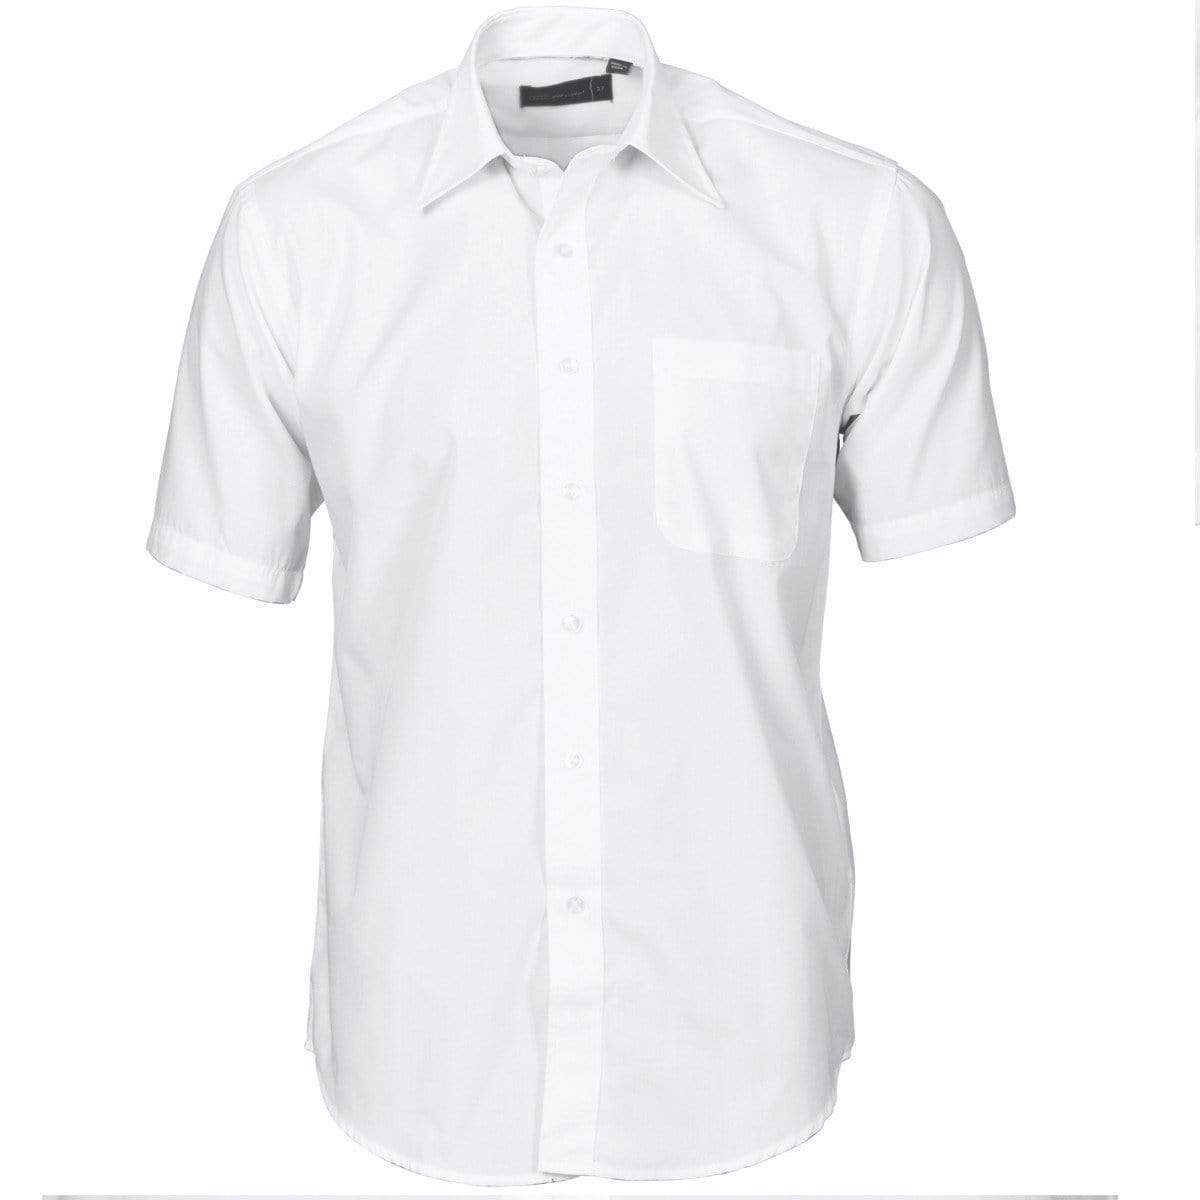 DNC WORKWEAR Polyester Cotton Short Sleeve Business Shirt 4131 - Simply Scrubs Australia